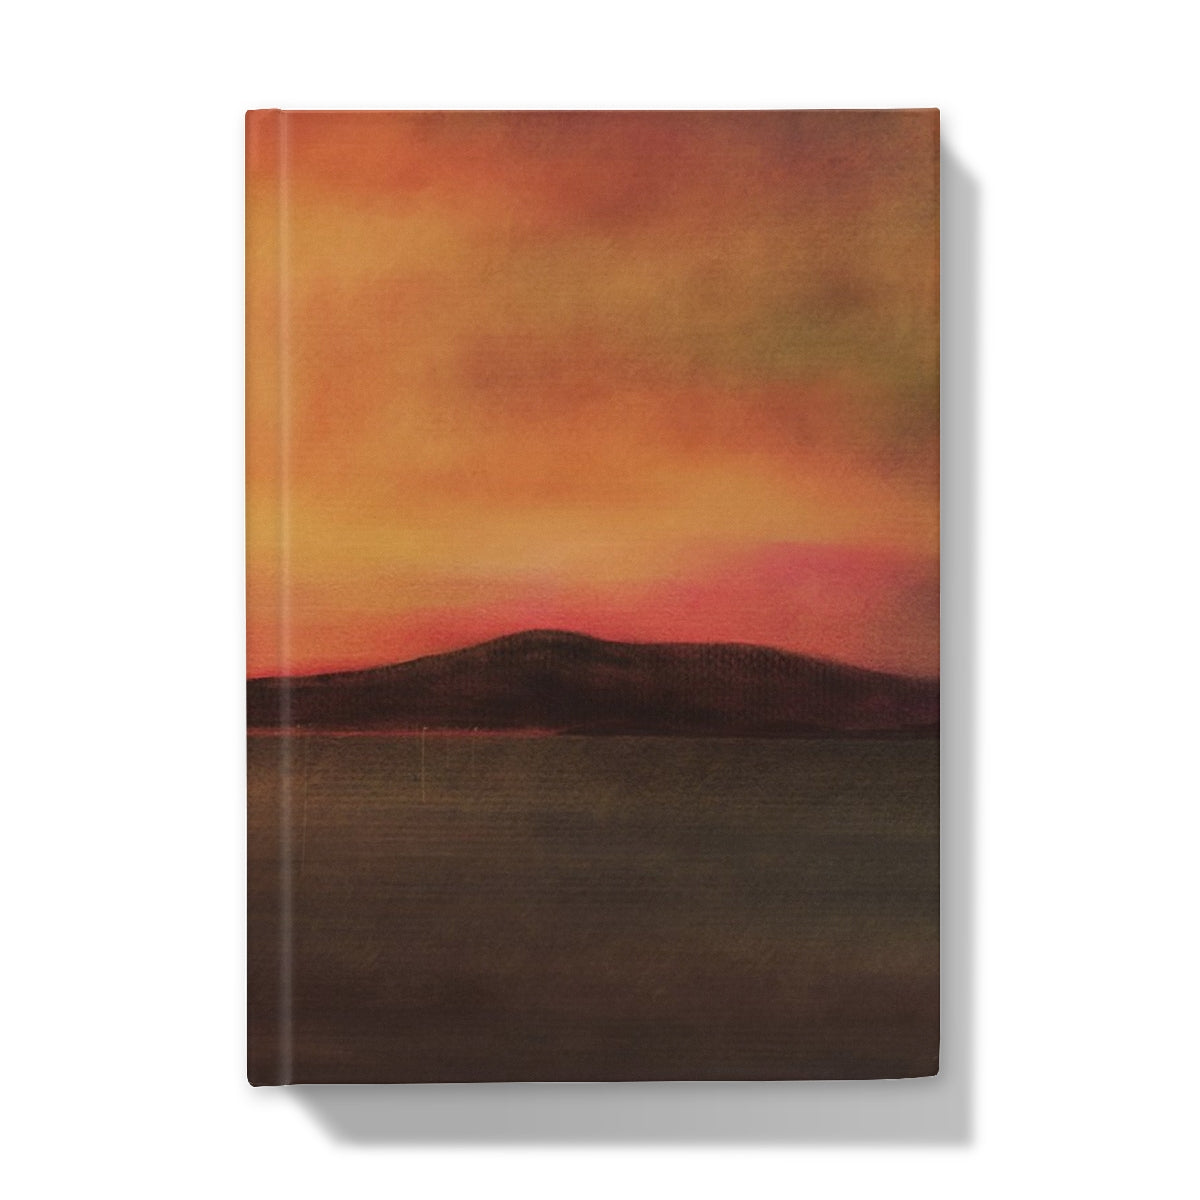 Harris Sunset Art Gifts Hardback Journal-Journals & Notebooks-Hebridean Islands Art Gallery-5"x7"-Plain-Paintings, Prints, Homeware, Art Gifts From Scotland By Scottish Artist Kevin Hunter